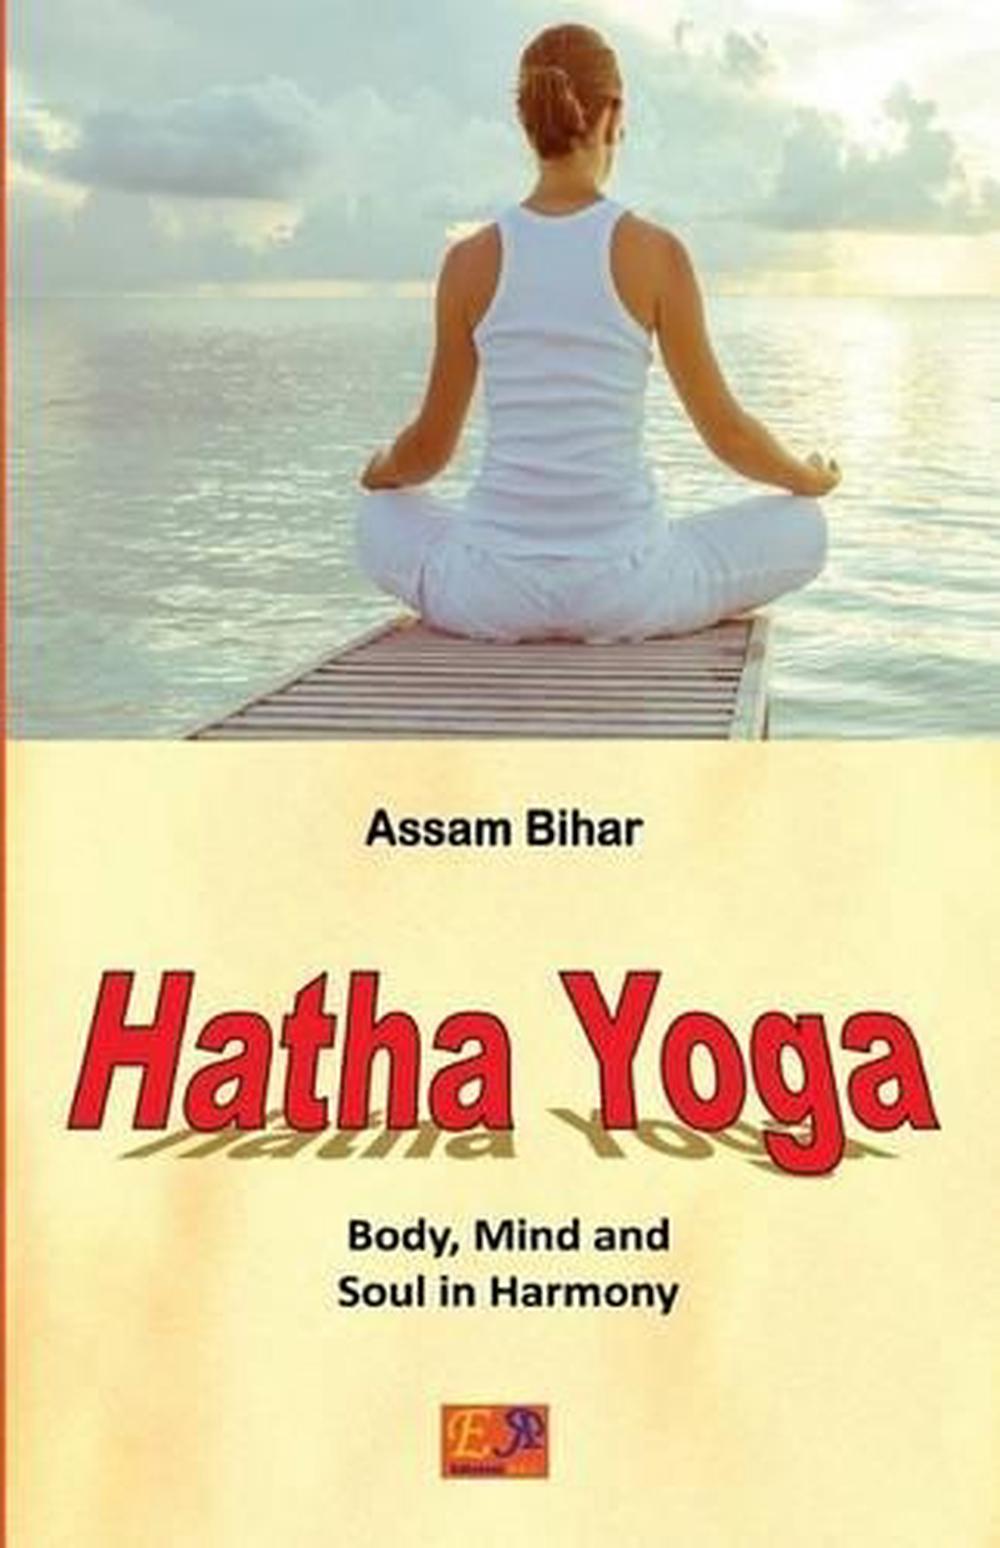 illustrated hatha yoga book satchidananda